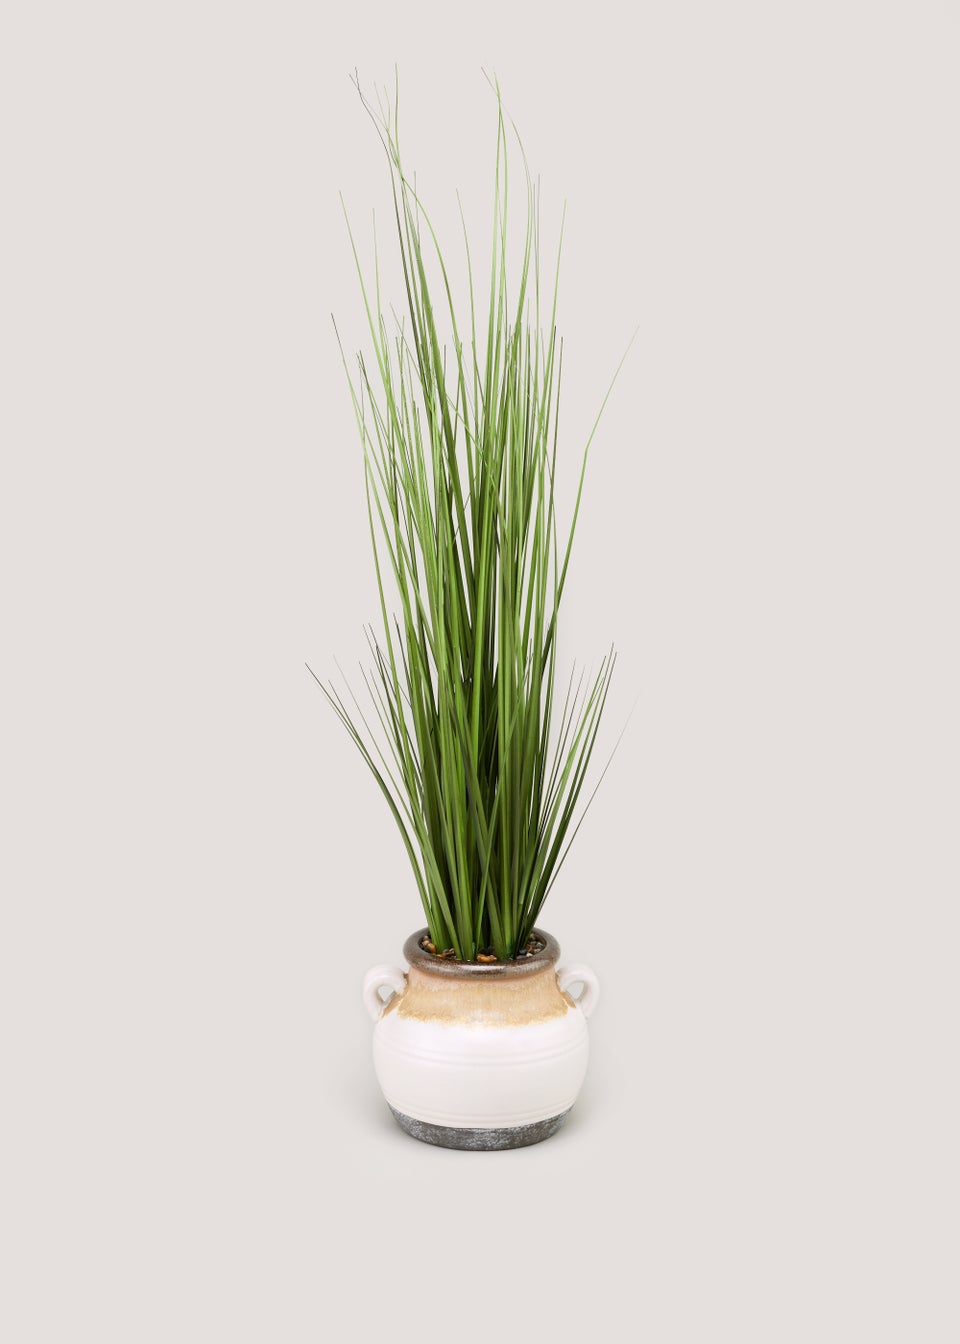 Grass in Reactive Pot (90cm x 24cm x 24cm)